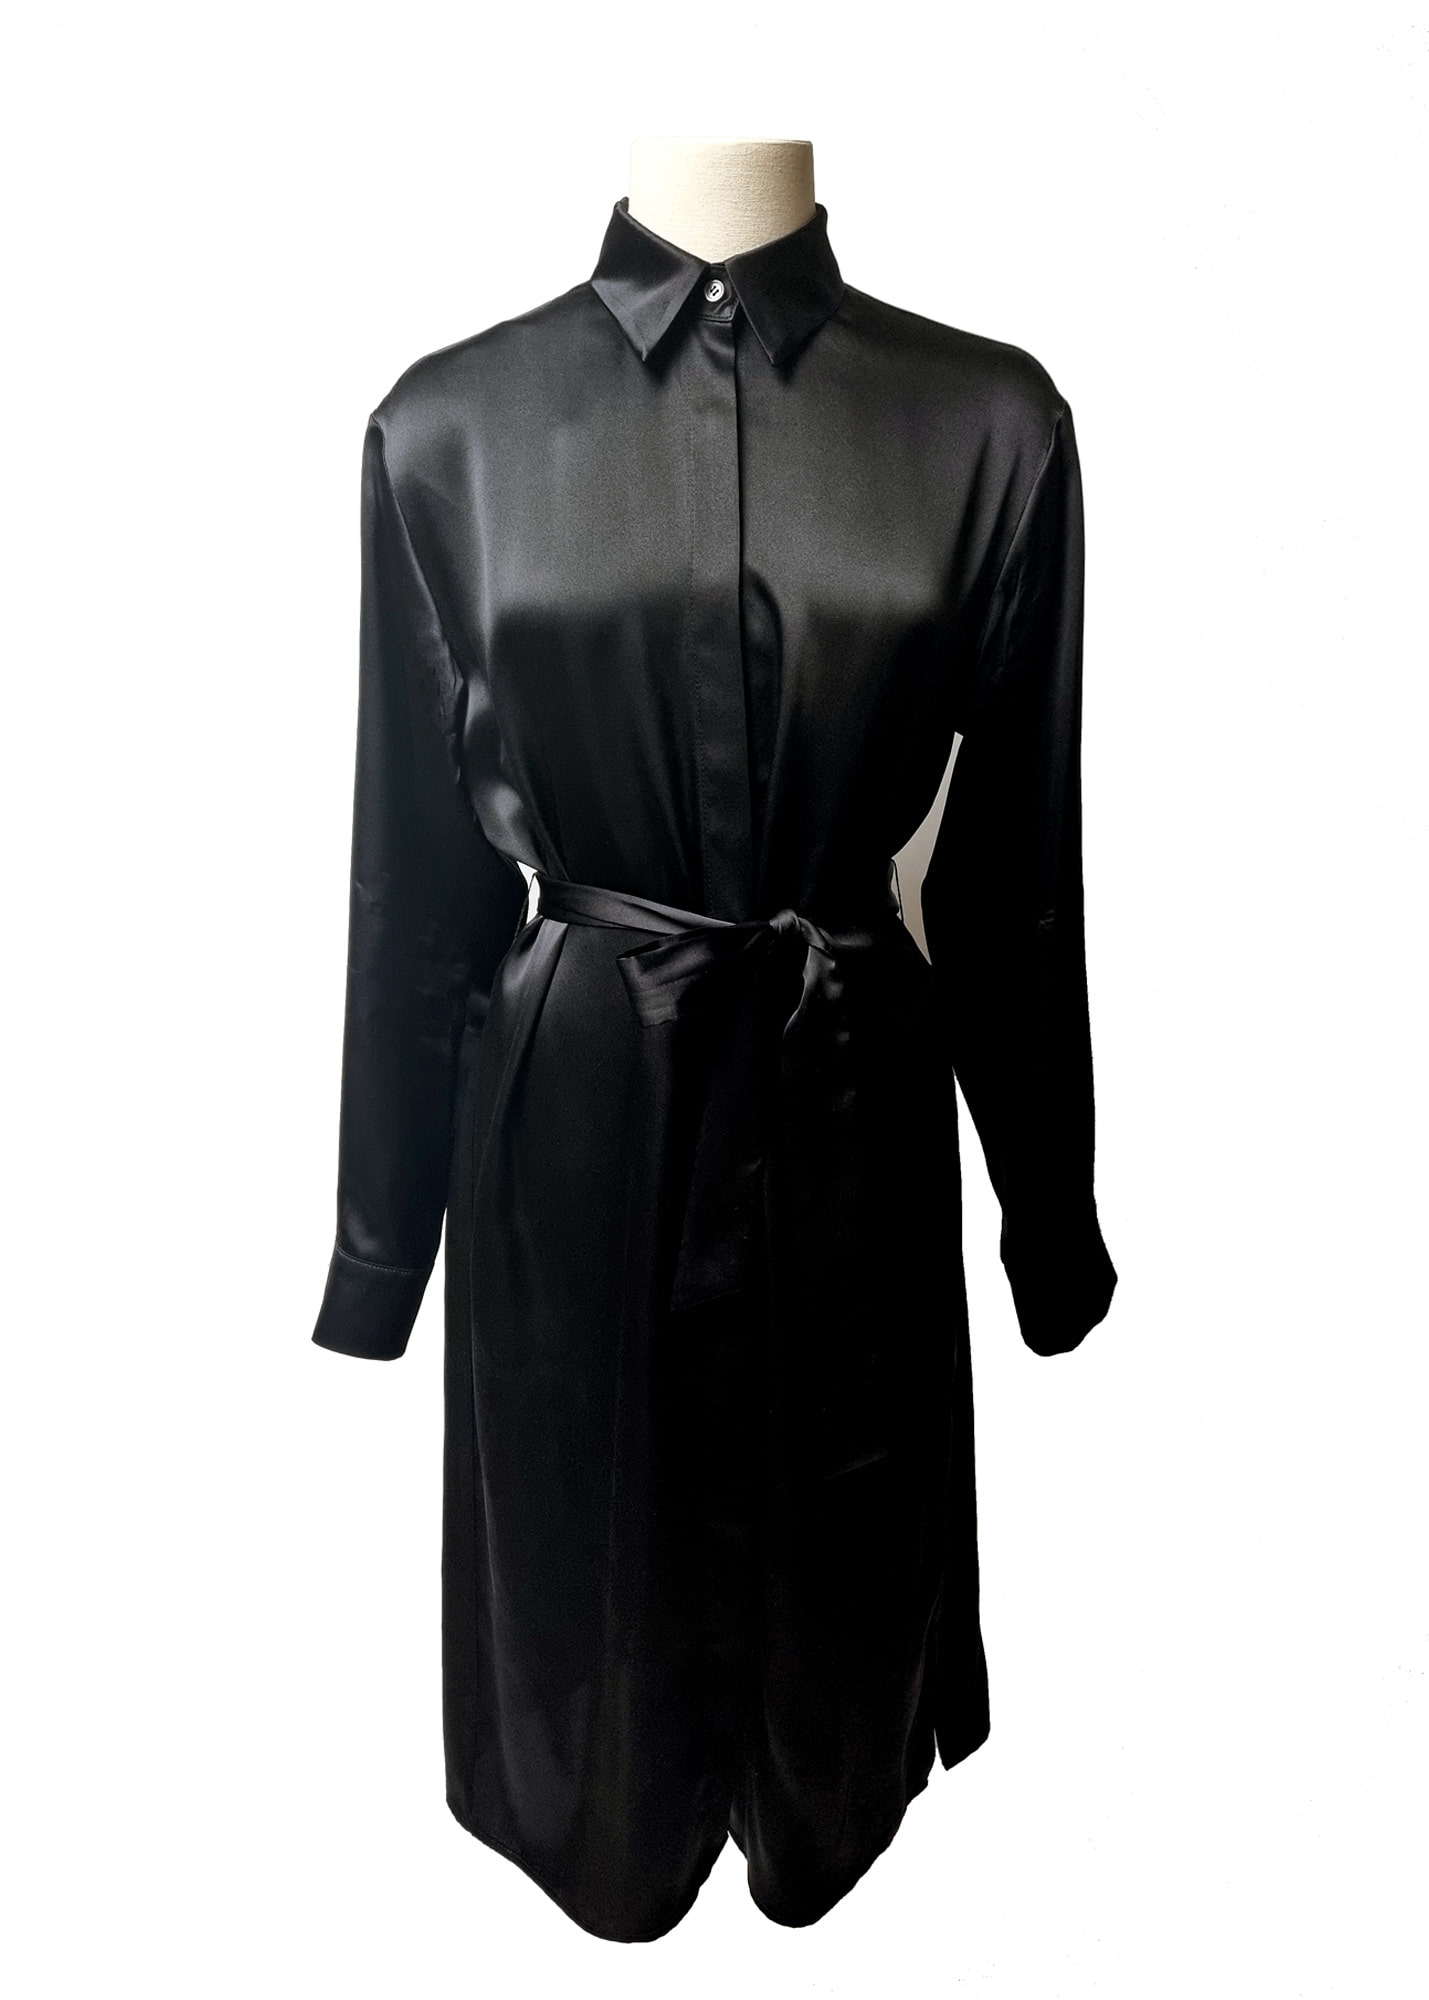 The Suits Beautiful Light Silk100 Dress, Black 아름다운빛 실크100 원피스 (박스핏)